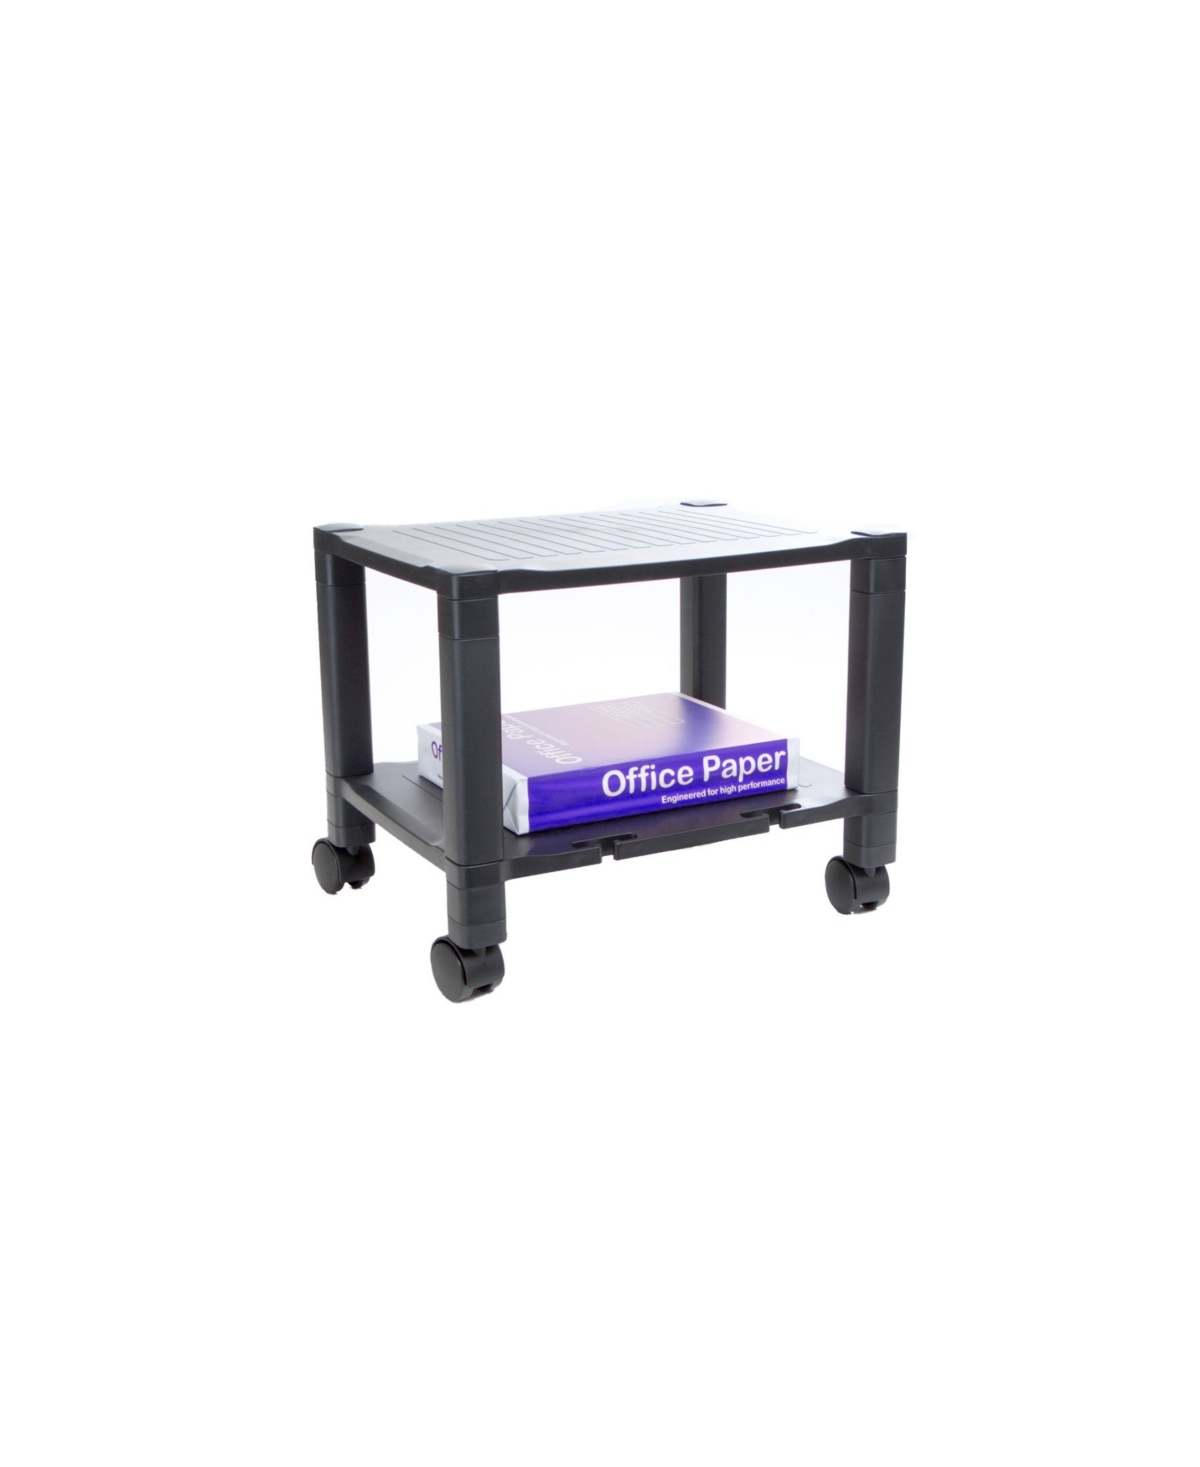 2 Shelf Mobile Printer Cart with Cord Management - Black